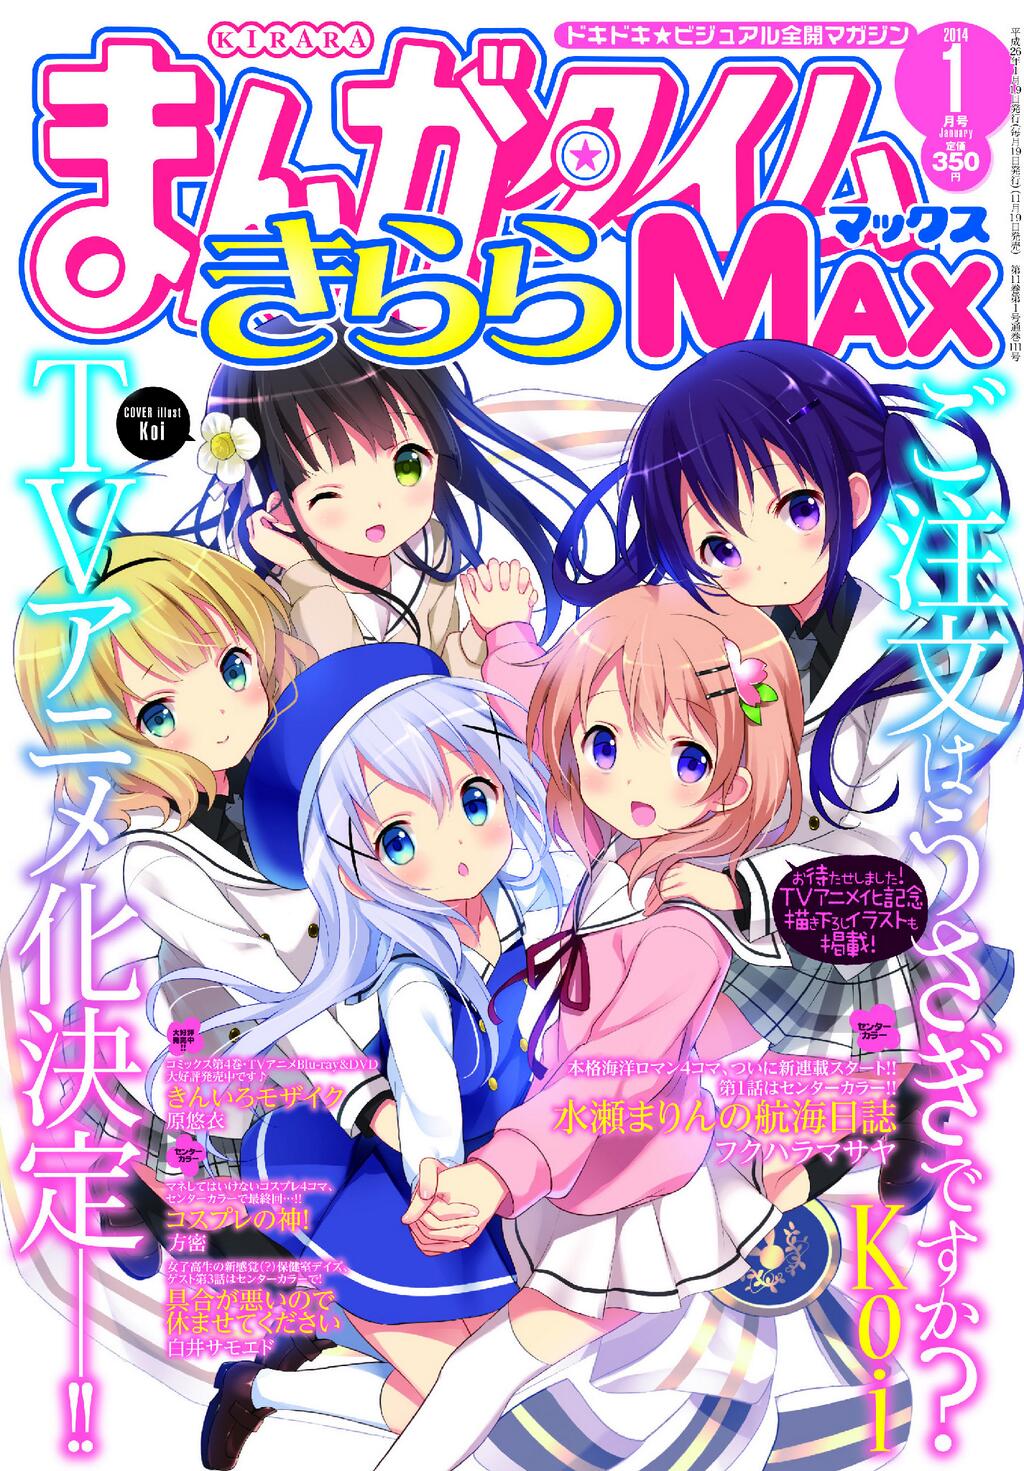 Is the Order a Rabbit? (Manga) - TV Tropes